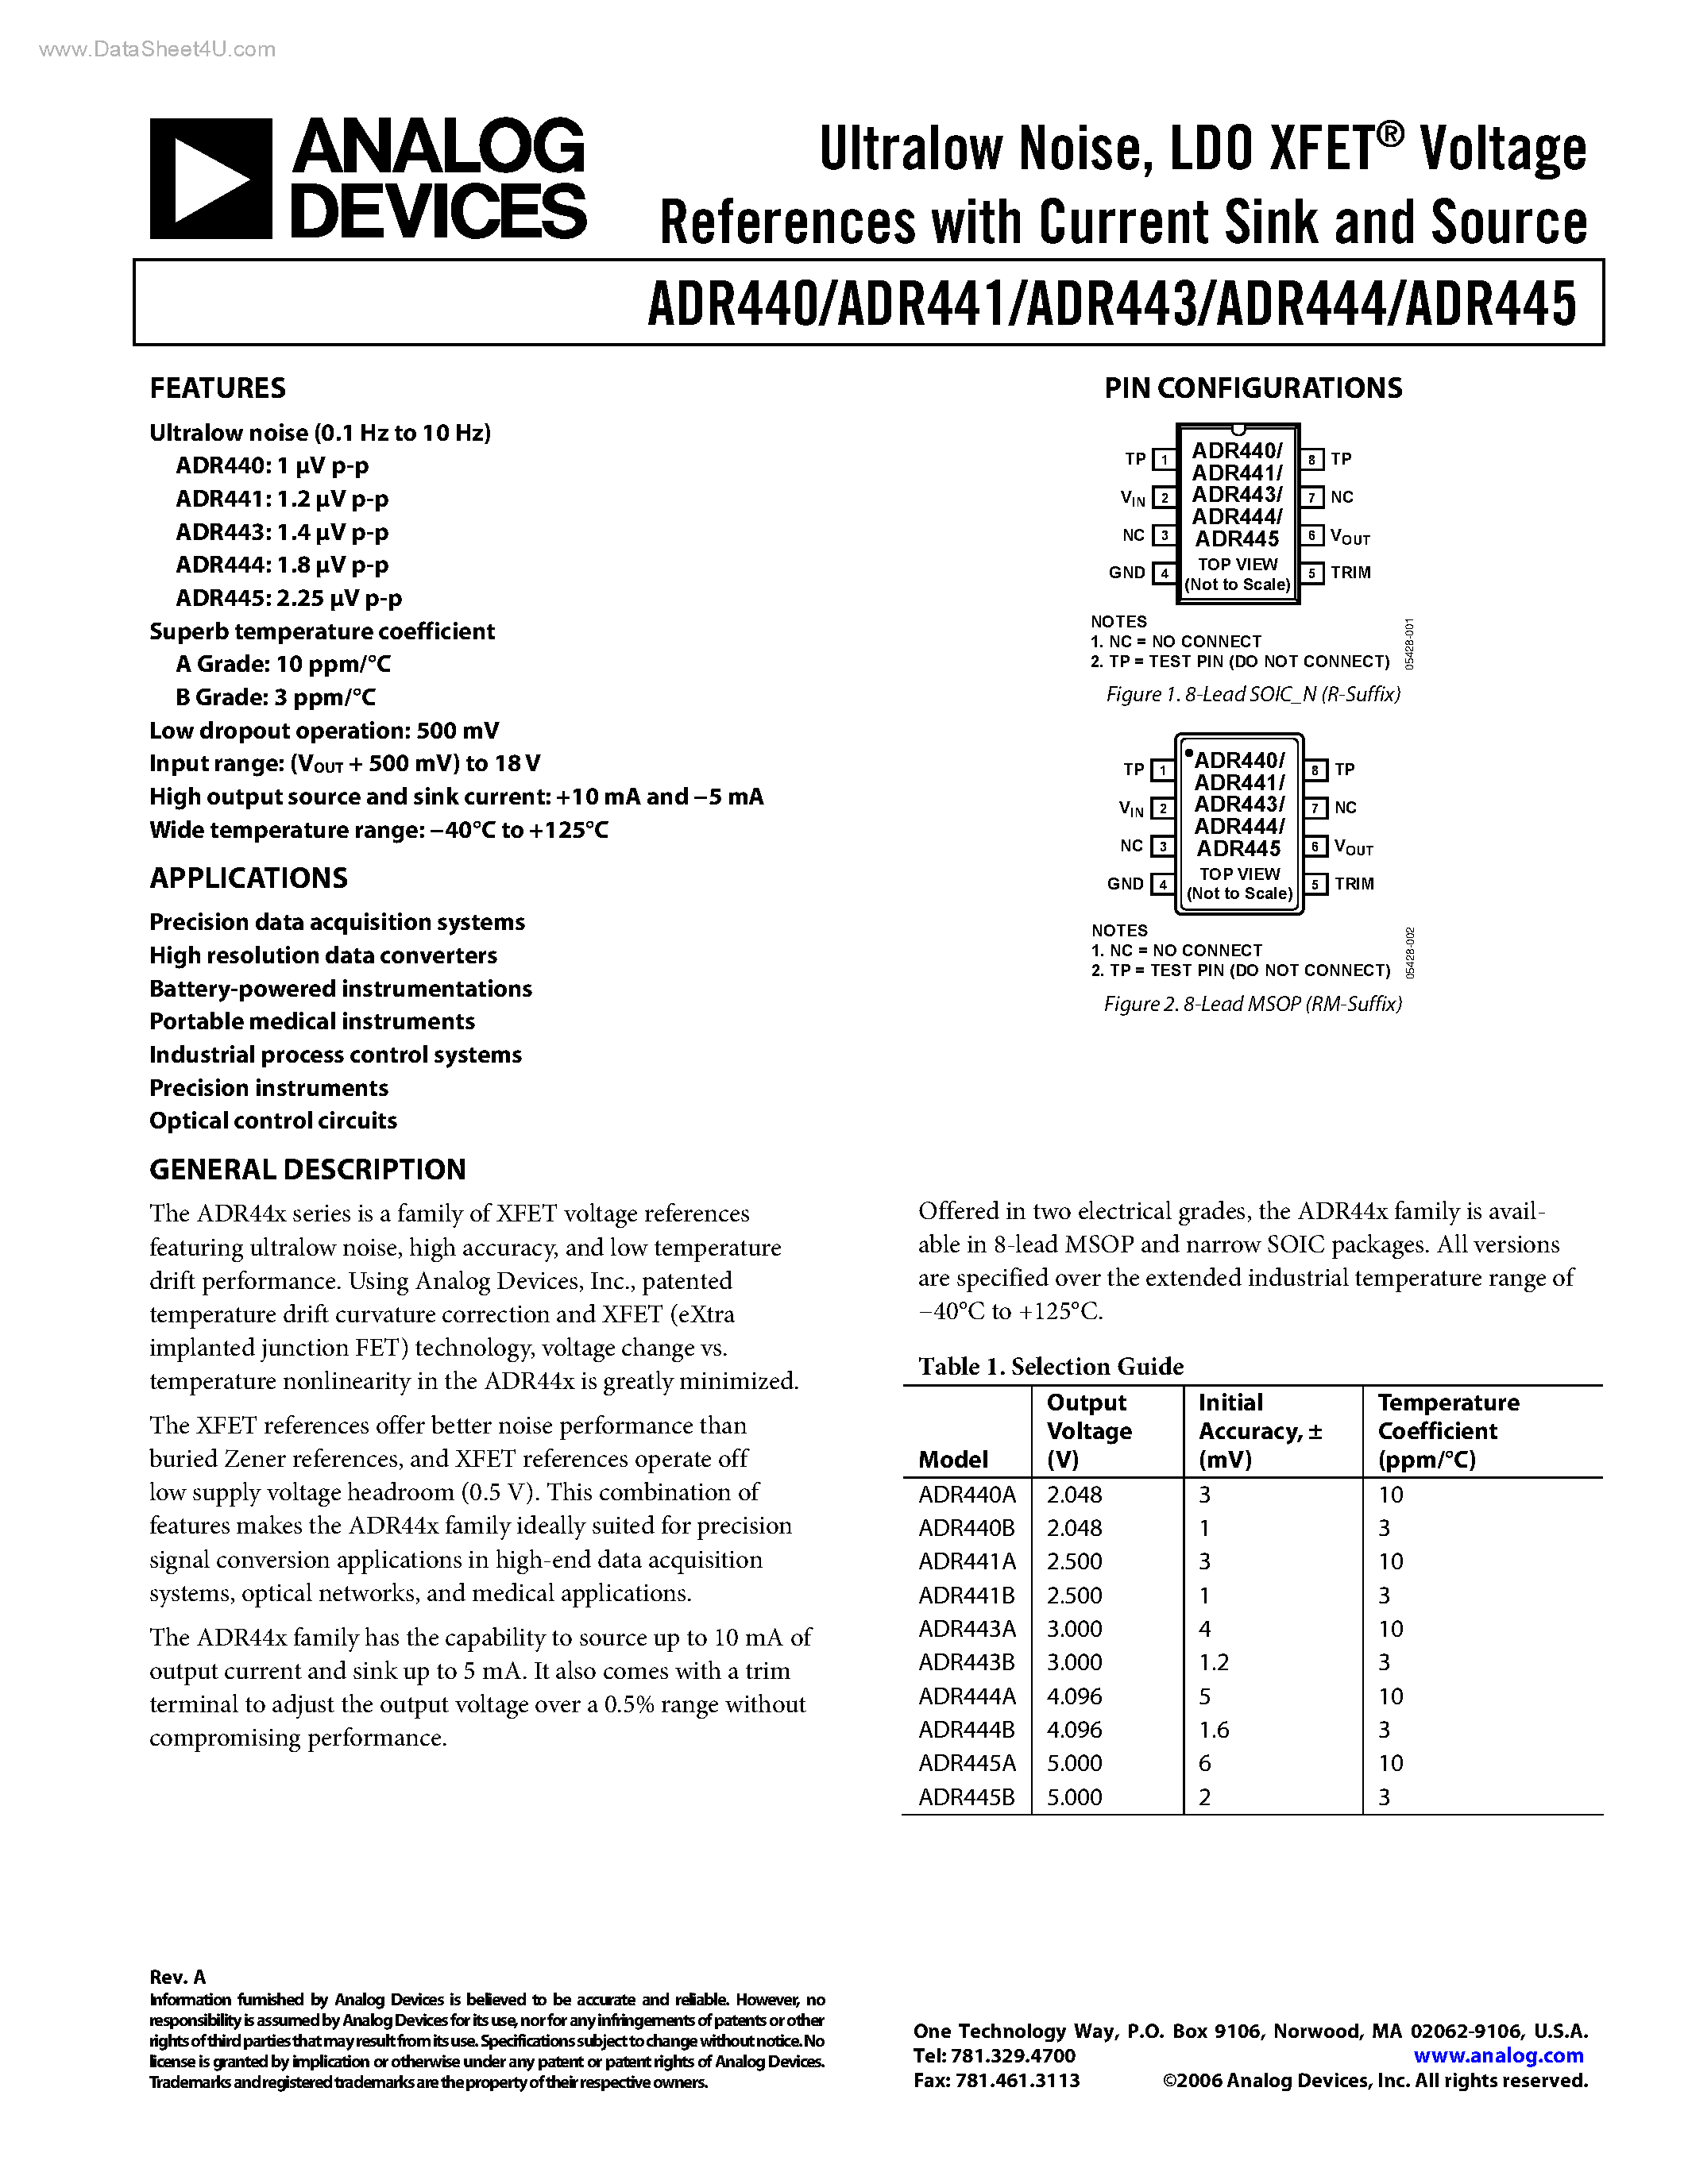 Datasheet ADR440 - (ADR440 - ADR445) LDO XFET Voltage References page 1